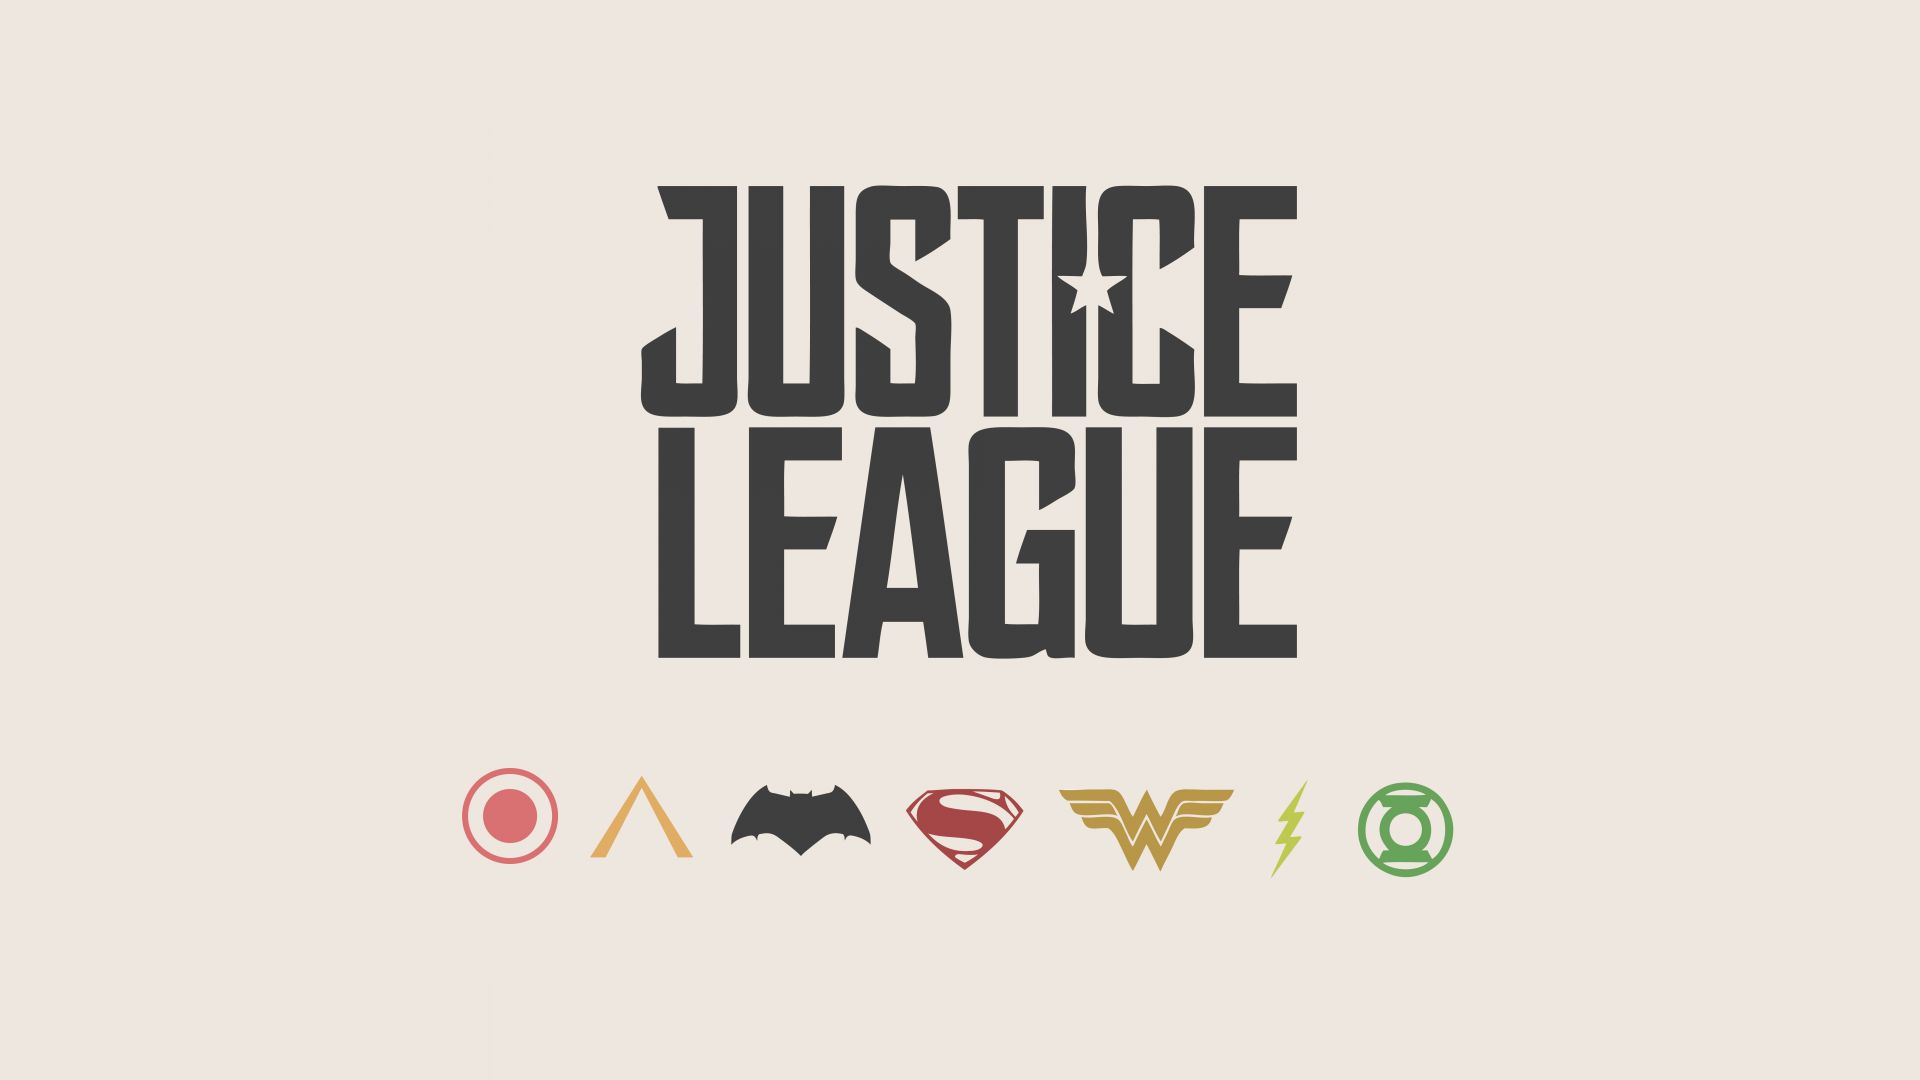 Лига справедливости, Justice League, poster, 8k (horizontal)